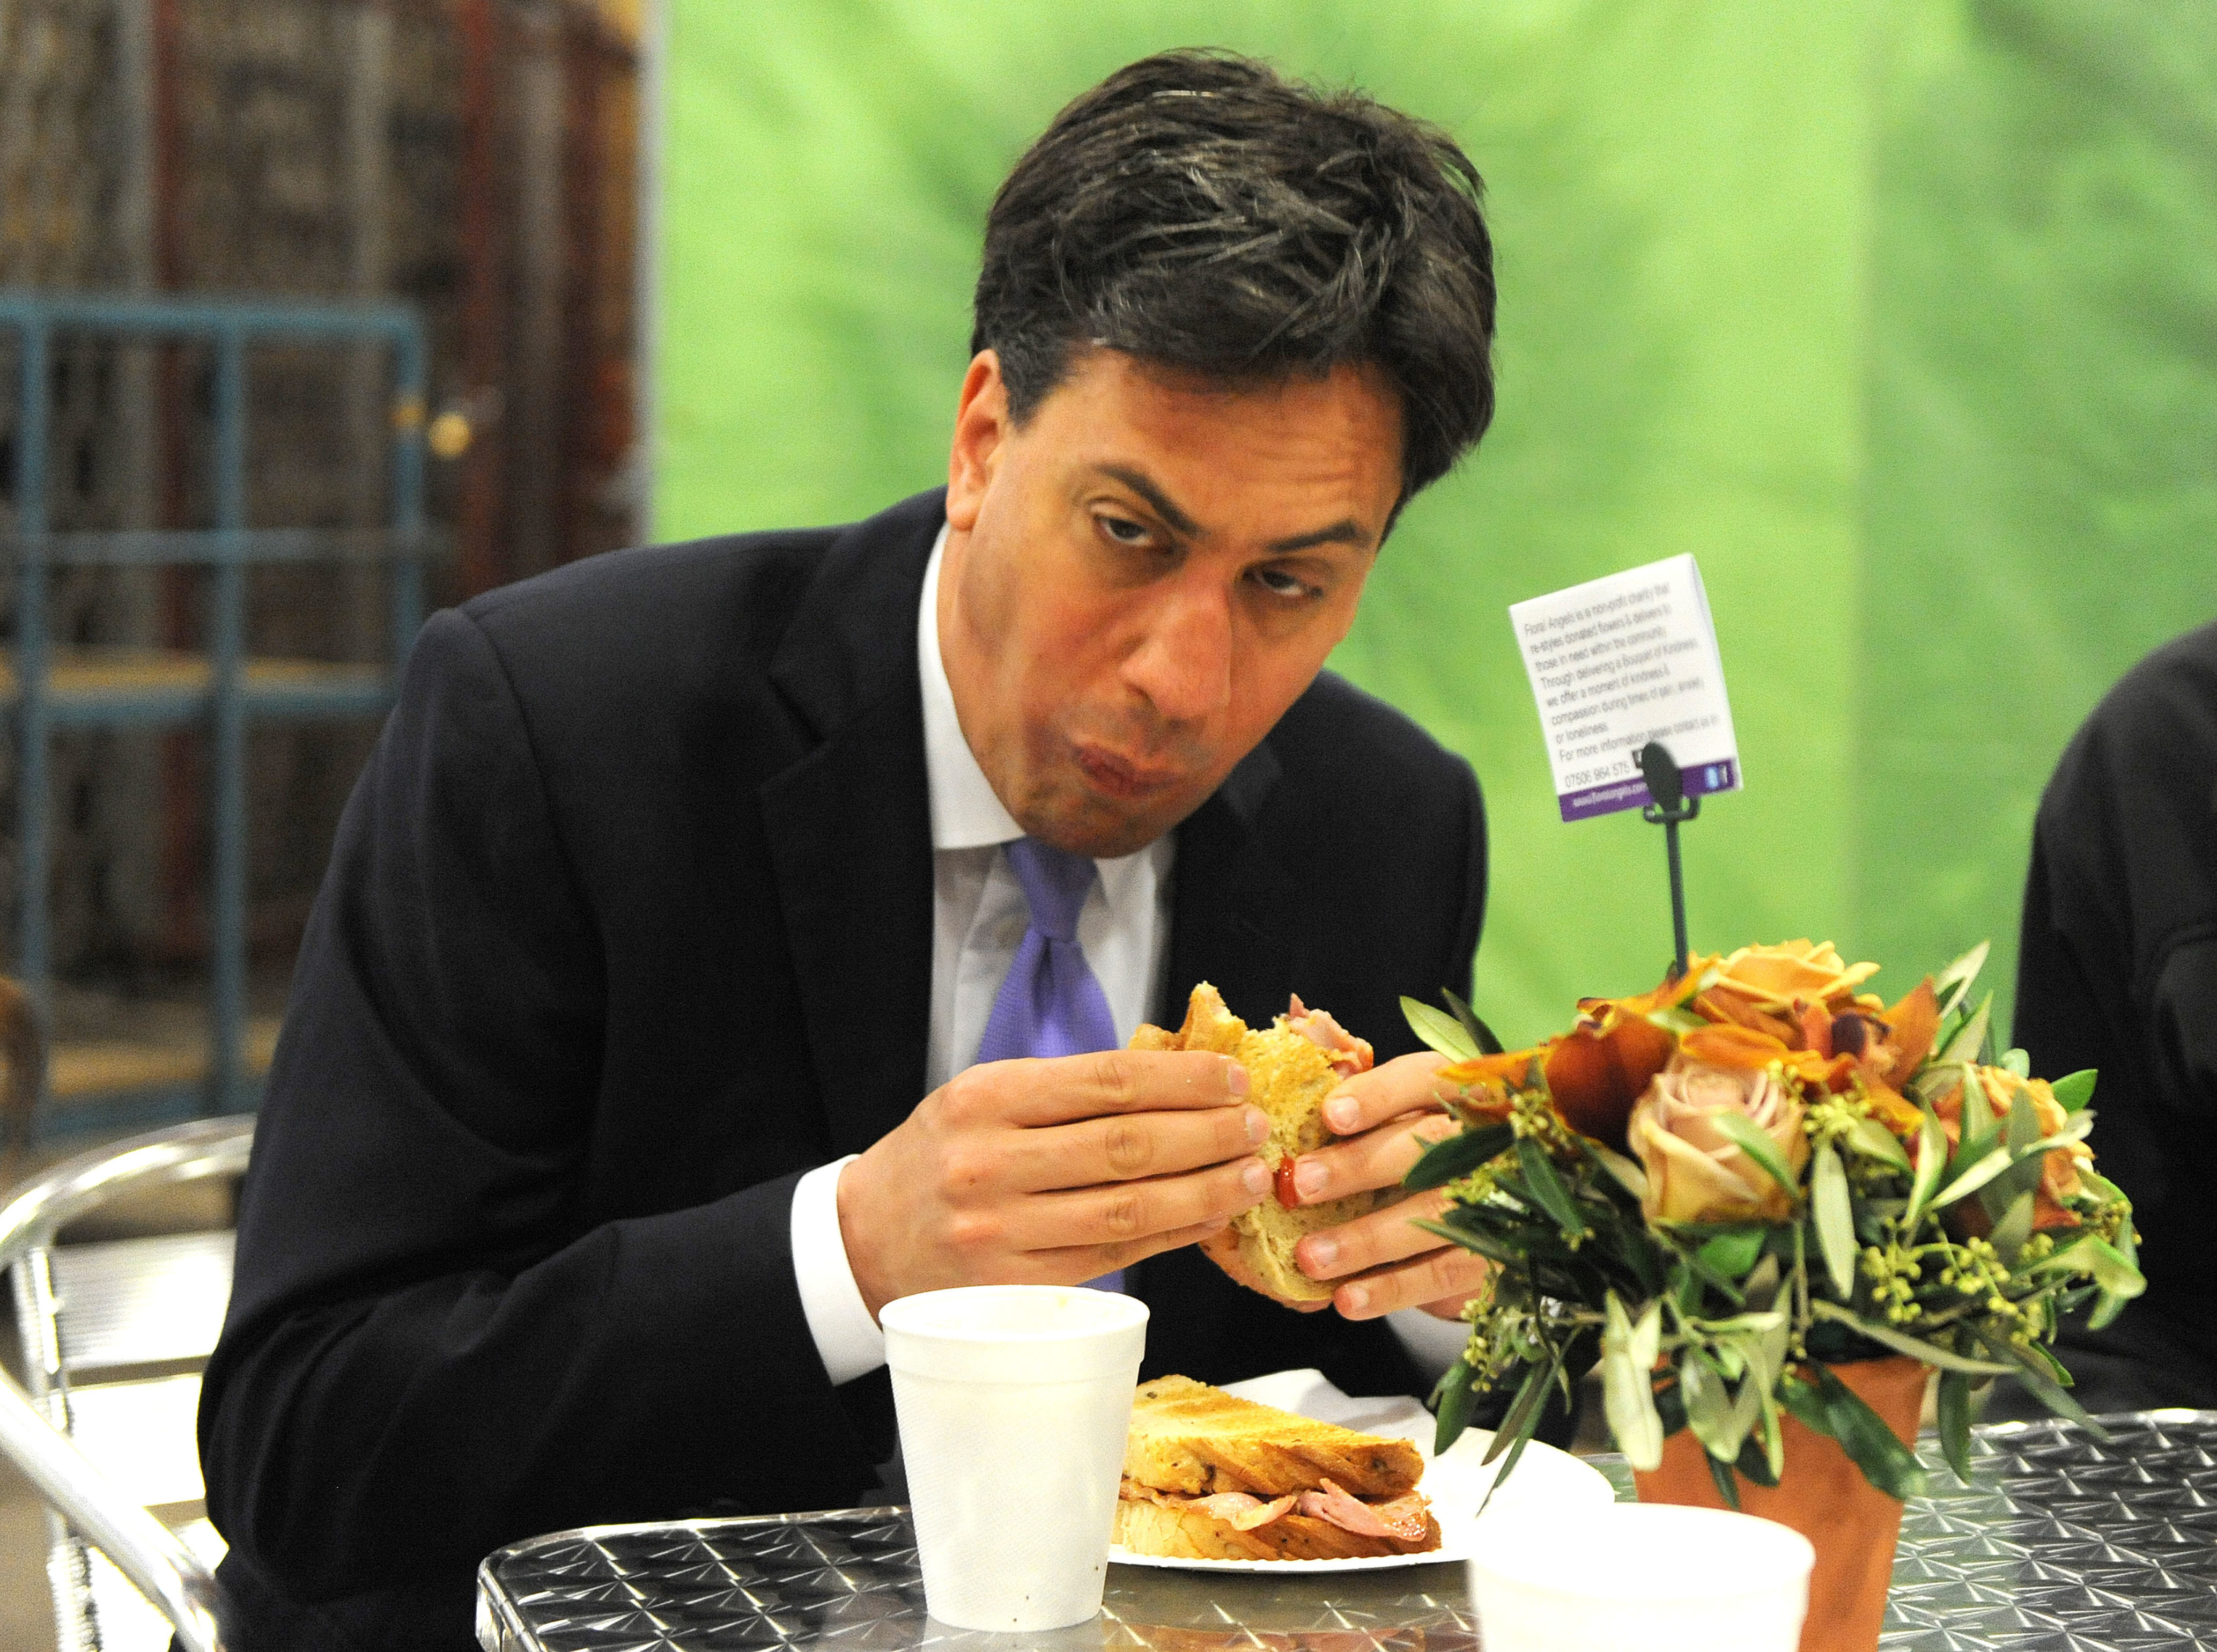 How A Bacon Sandwich Derailed Ed Miliband's UK Political Career ...